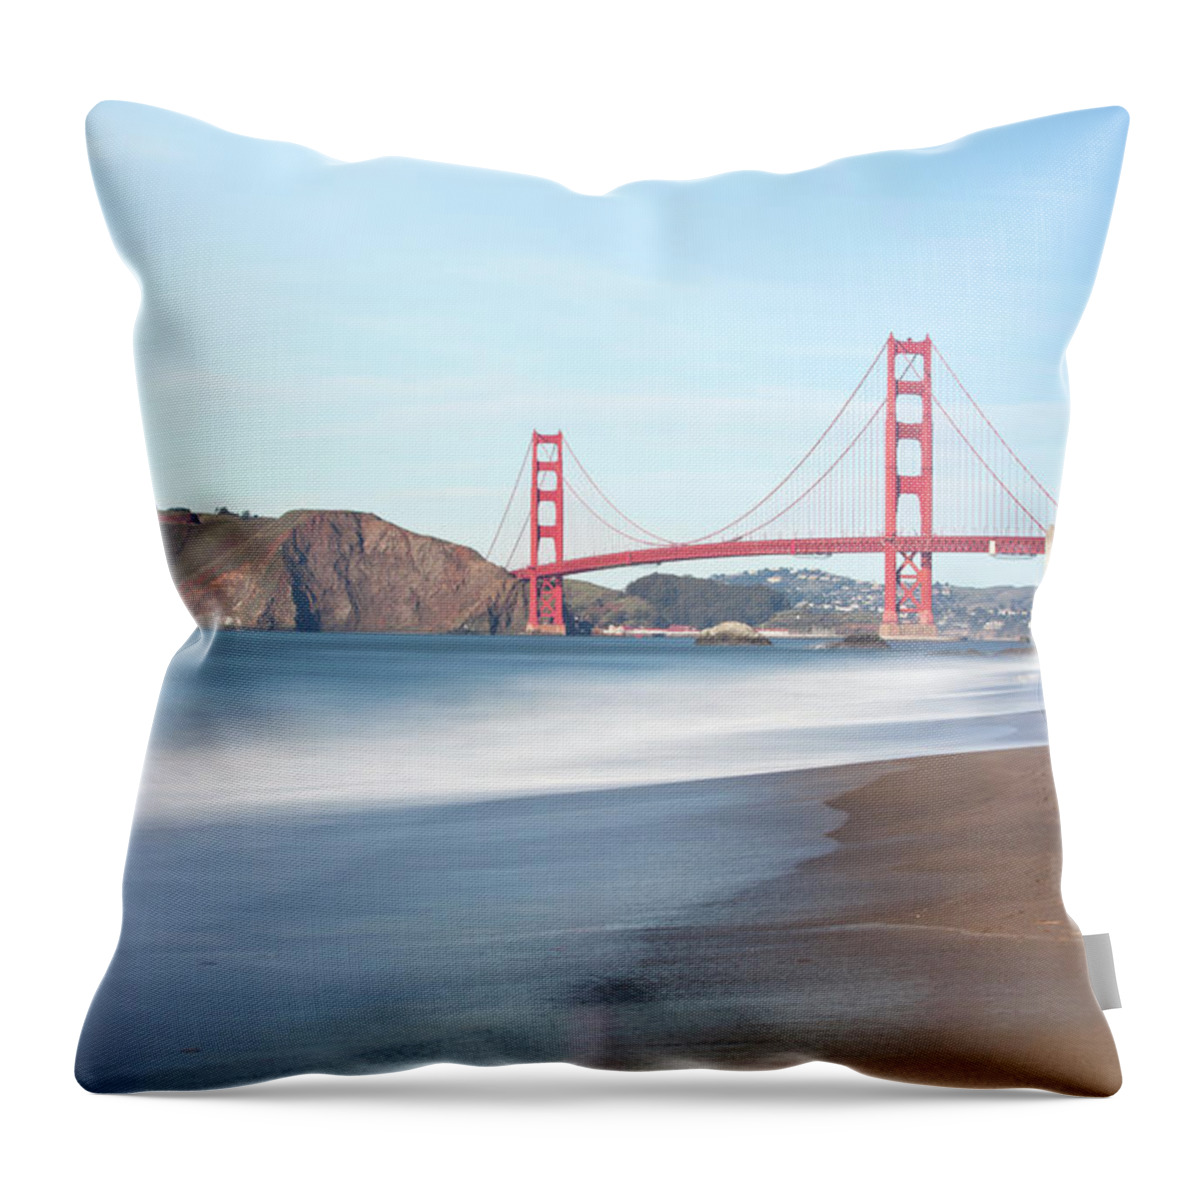 San Francisco Throw Pillow featuring the photograph Golden Gate Bridge by Mozcann